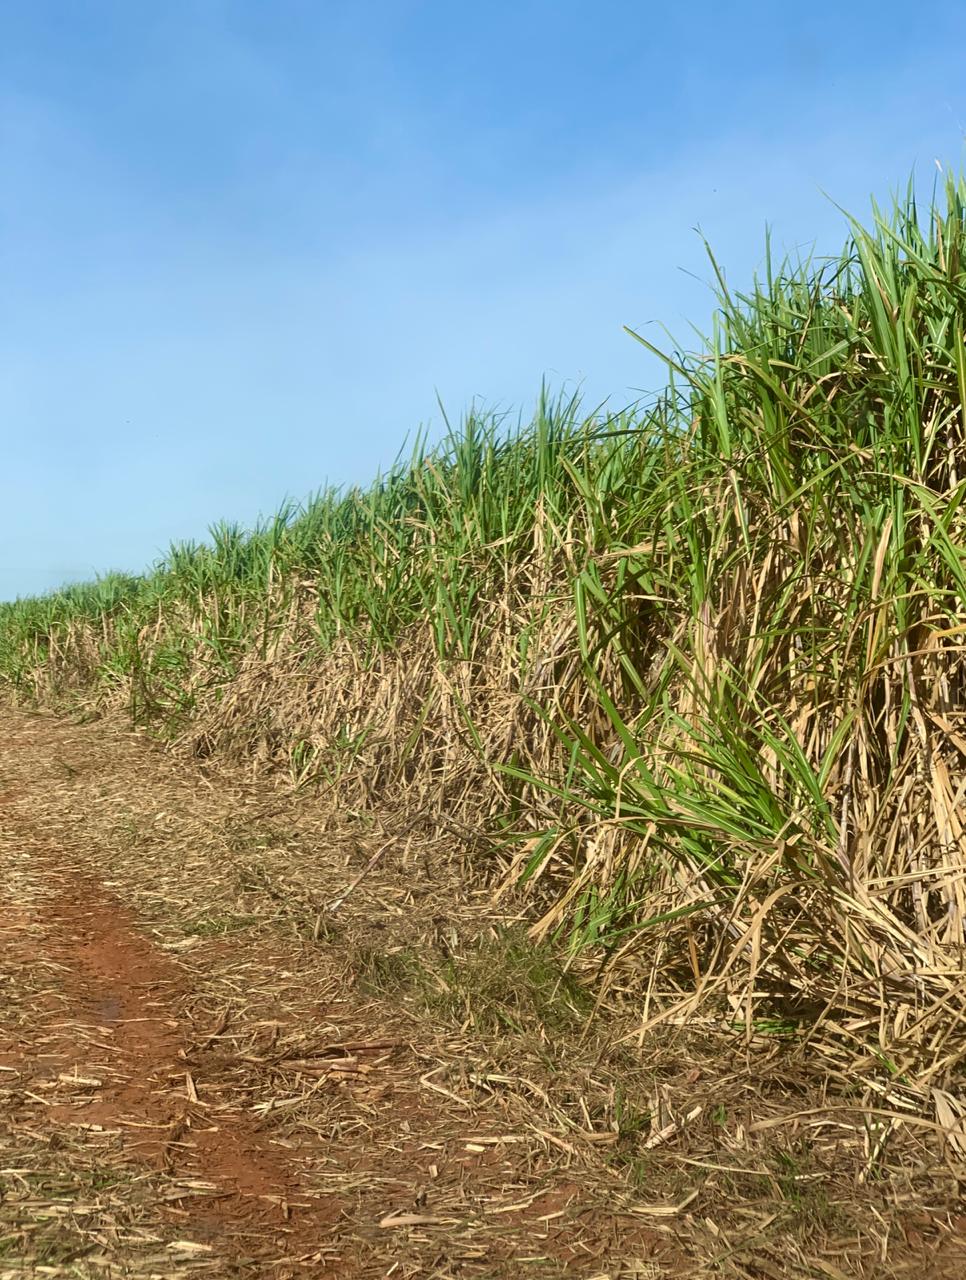 Sugarcane at Socicana farming association, Brazil